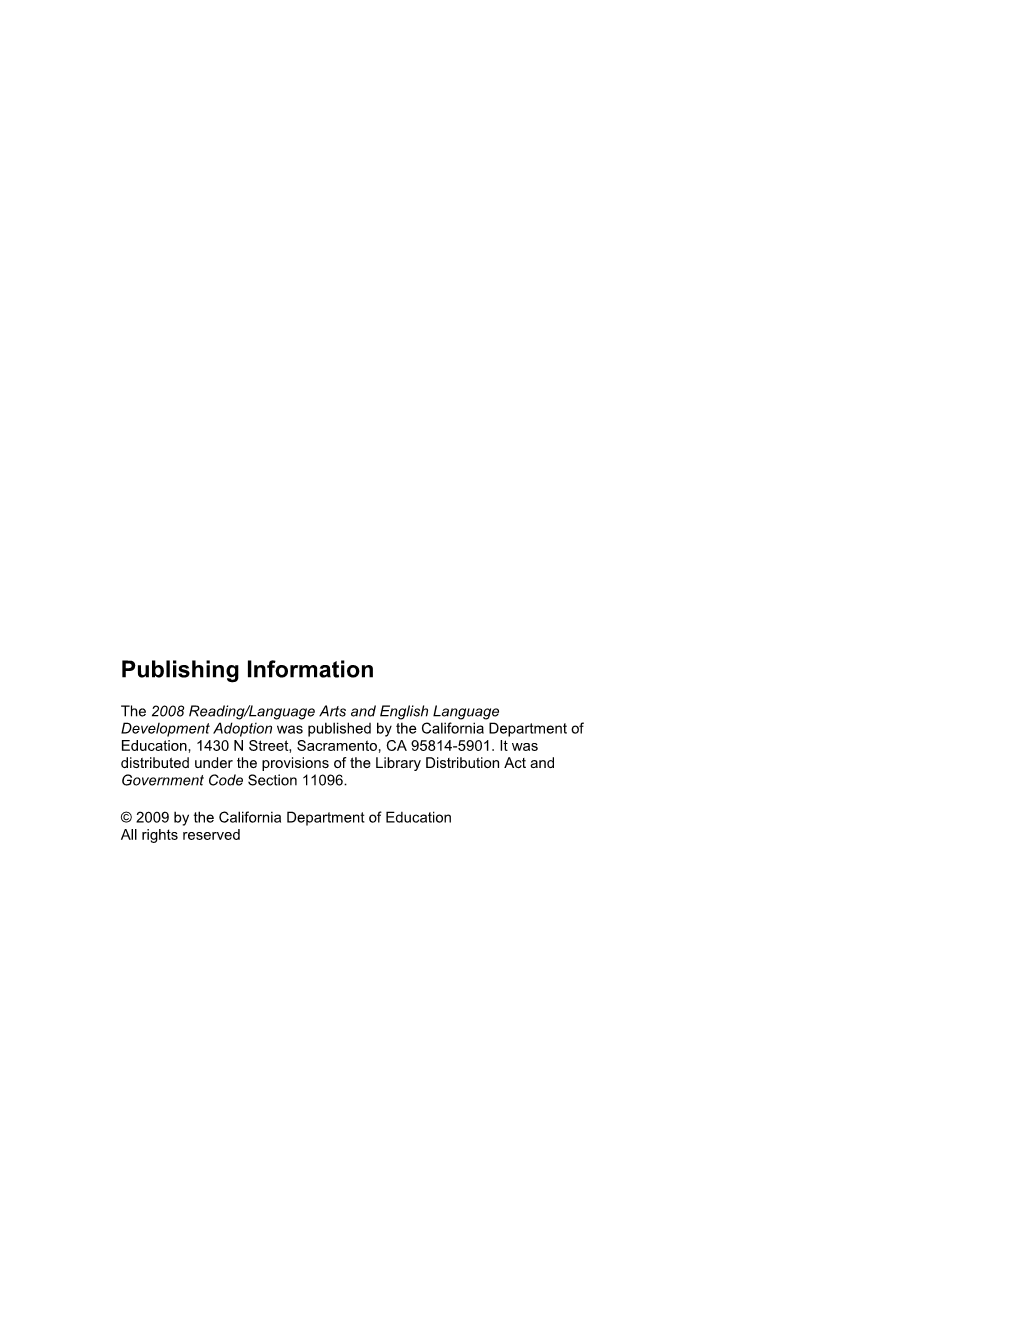 SBE 2008 RLA/ELD Primary Adoption Report - Instructional Materials (CA Dept of Education)